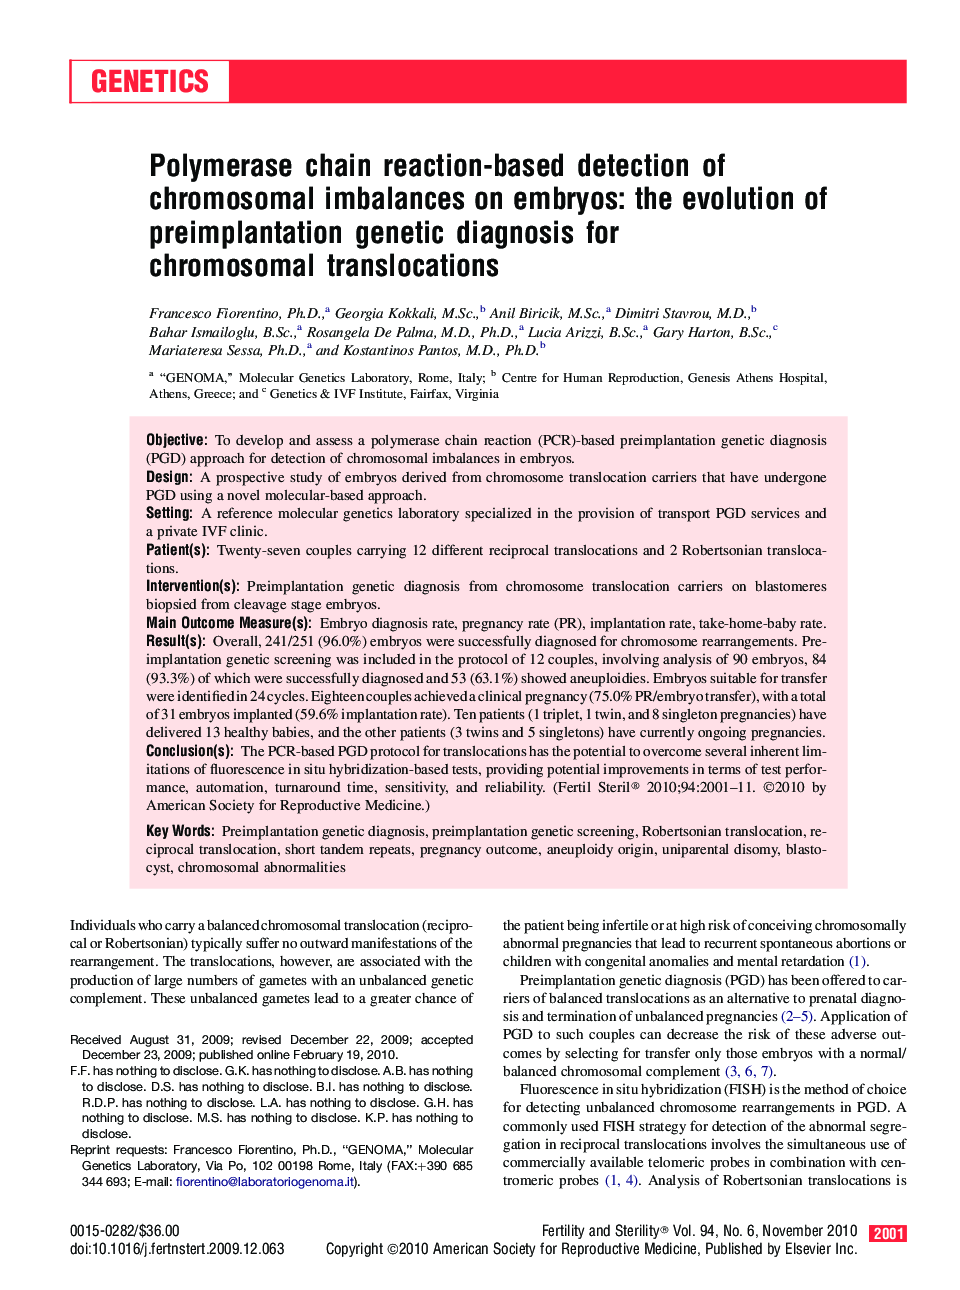 Polymerase chain reaction-based detection of chromosomal imbalances on embryos: the evolution of preimplantation genetic diagnosis for chromosomal translocations